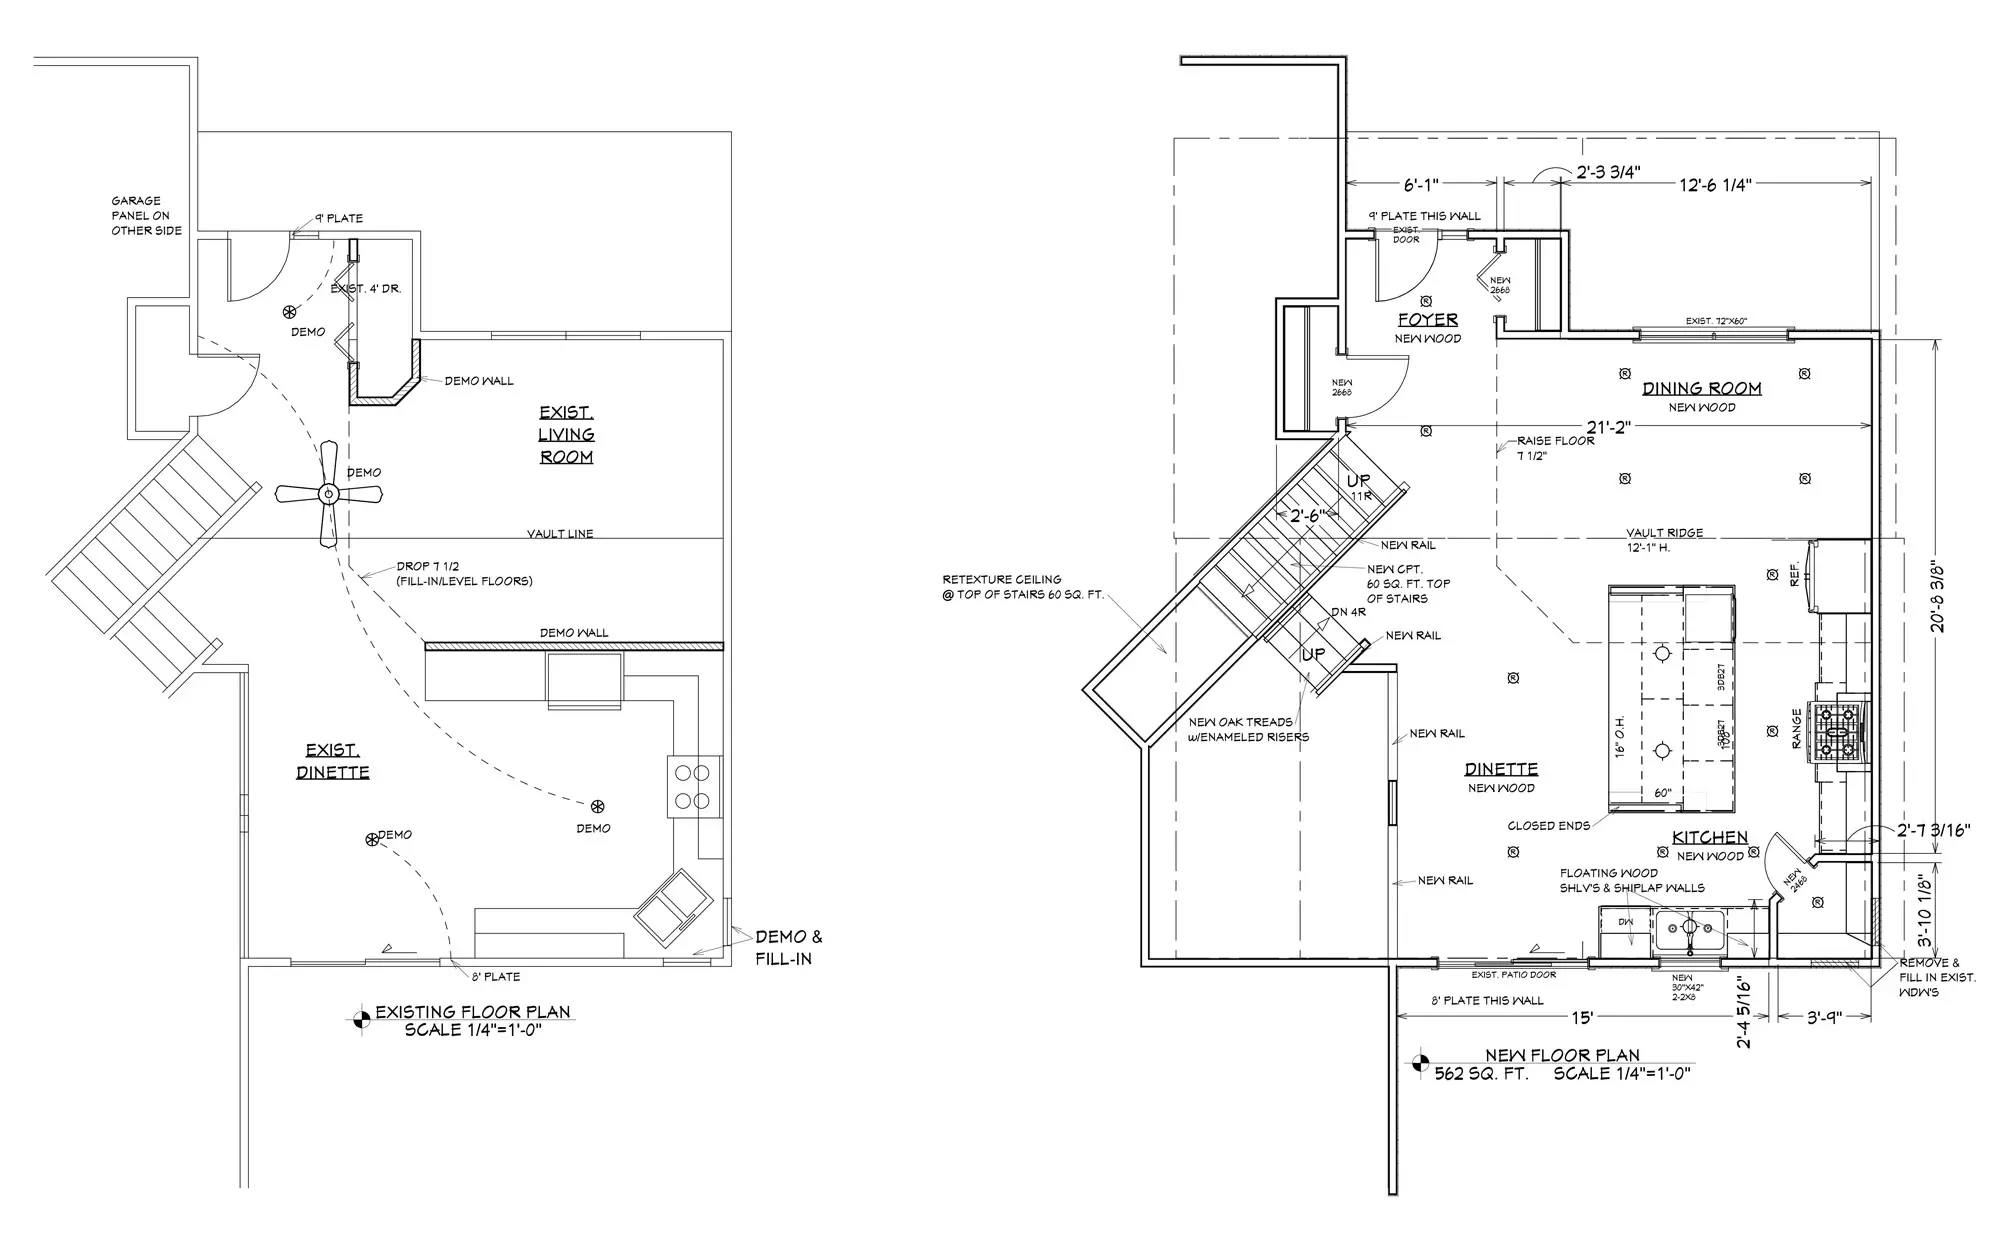 Kitchen & Living Room Existing Floor Plan and Remodel New Floor Plan